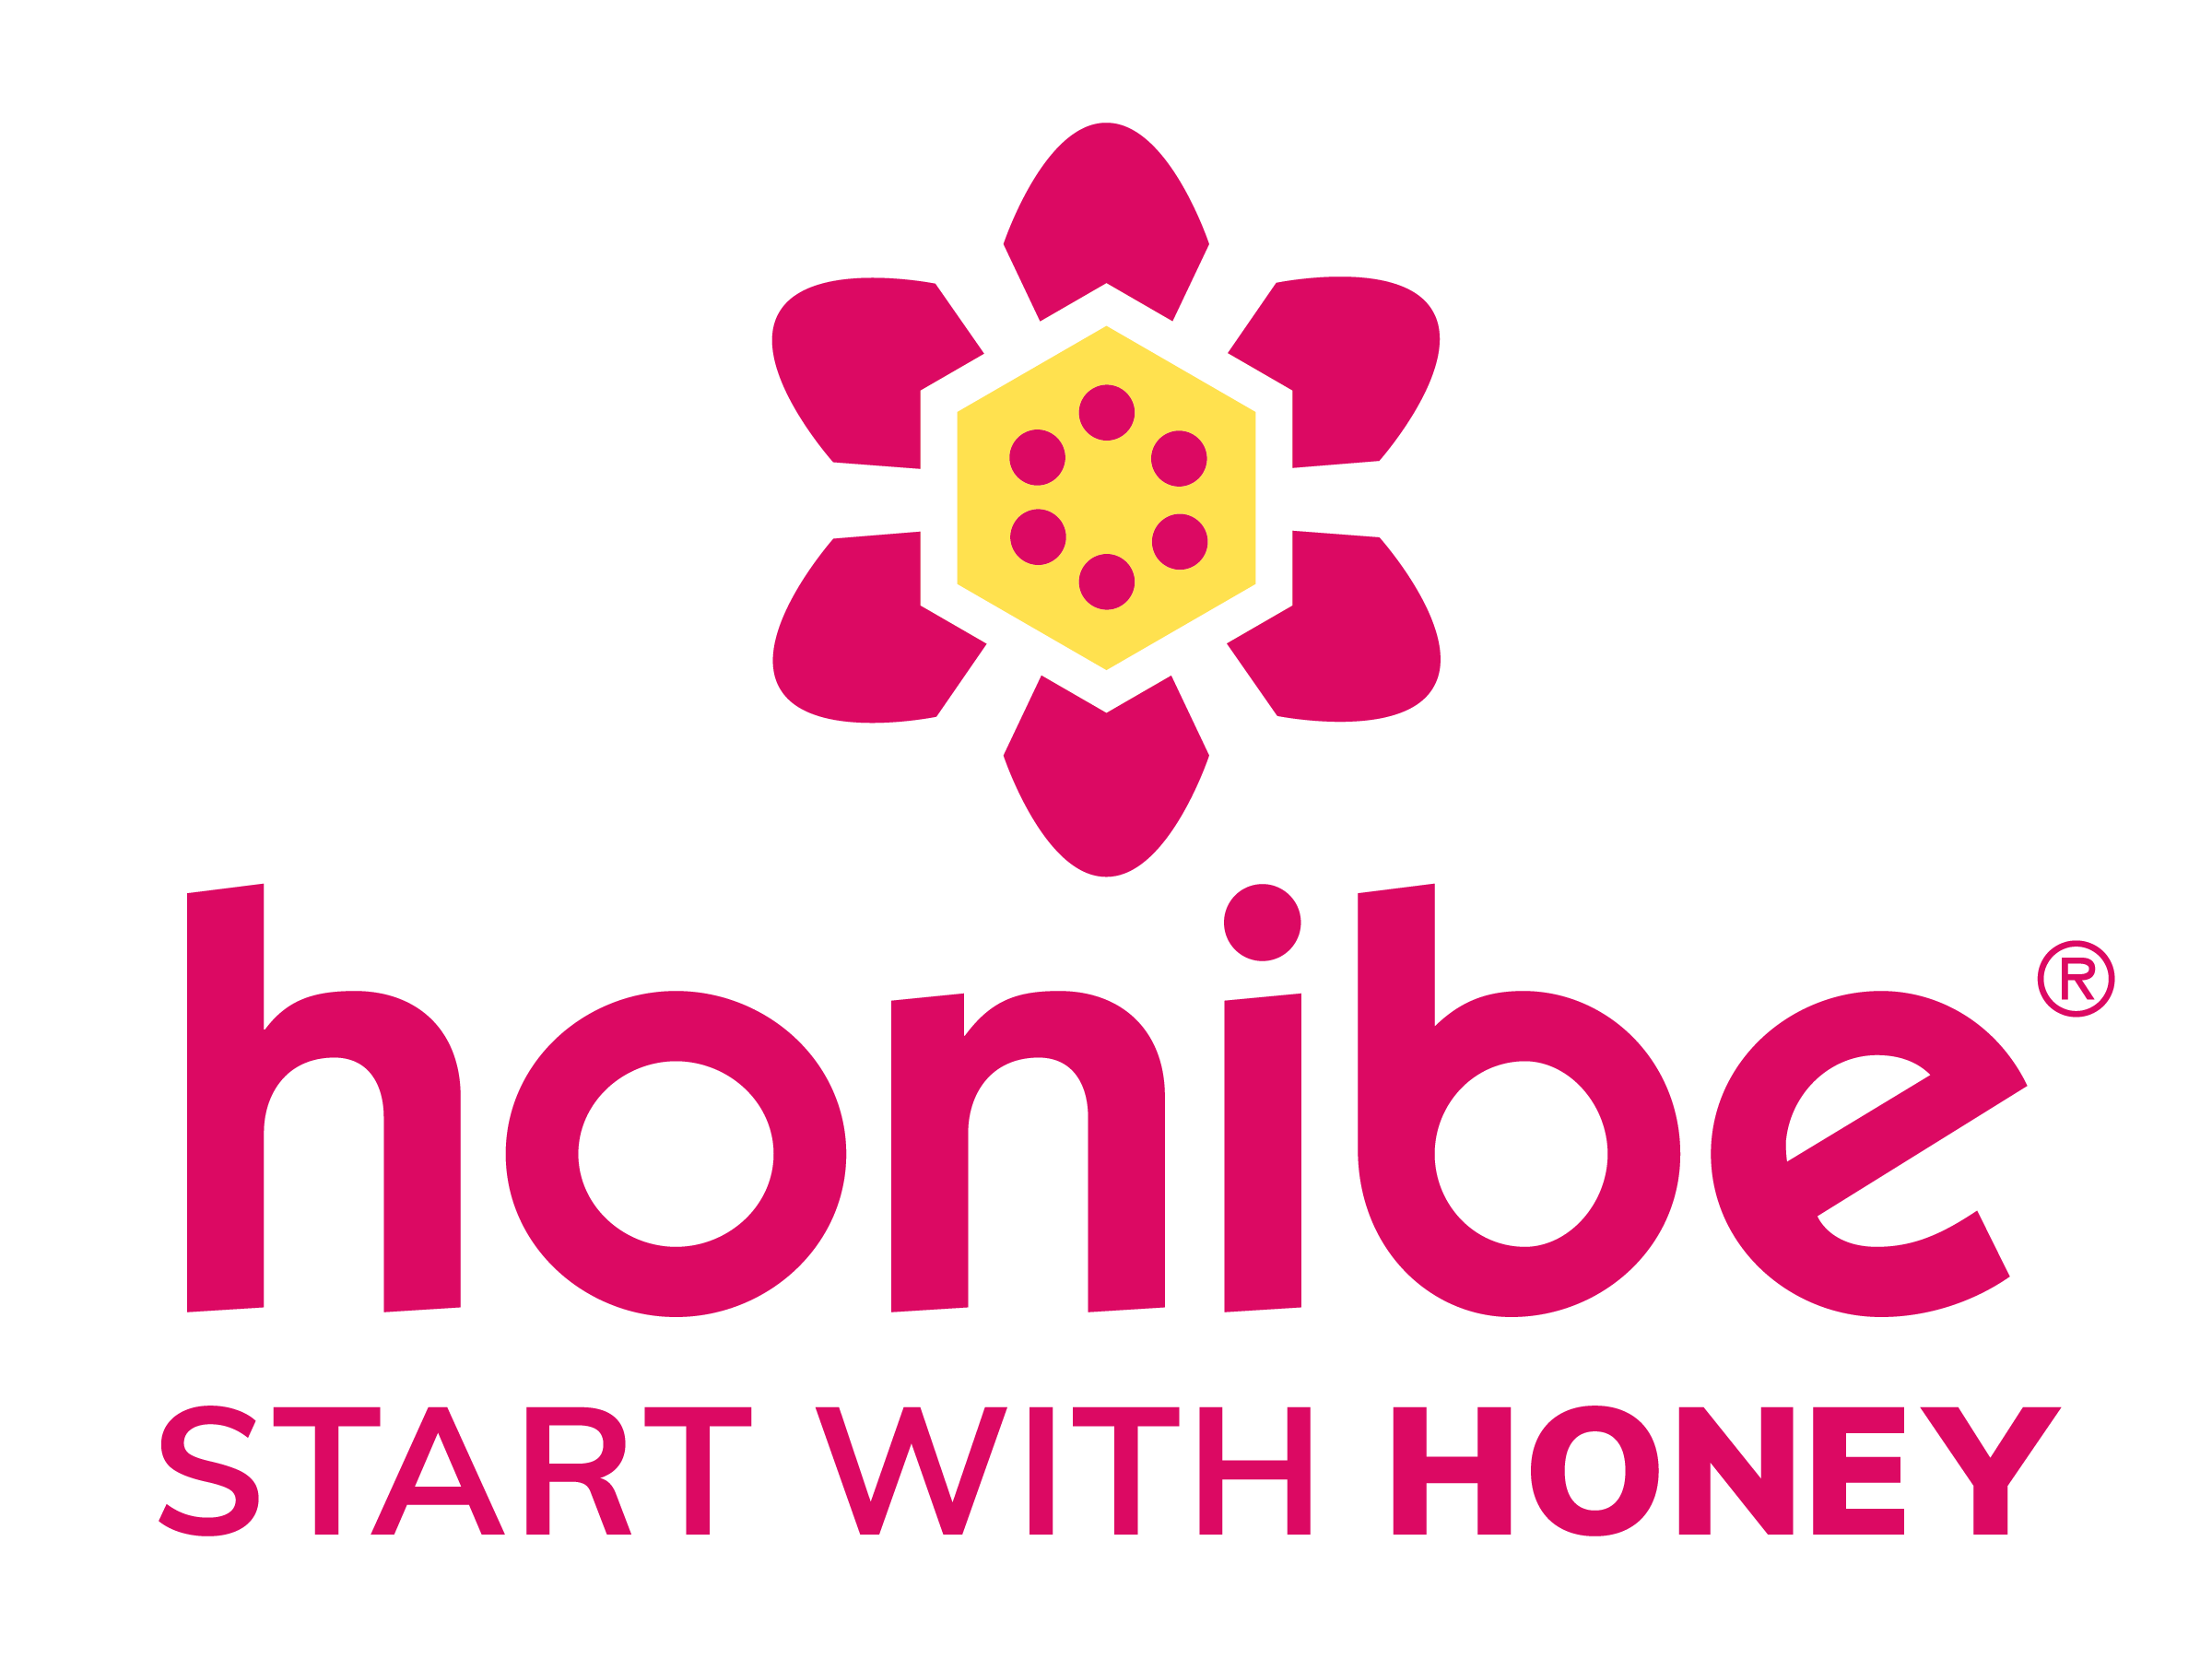 Honibe